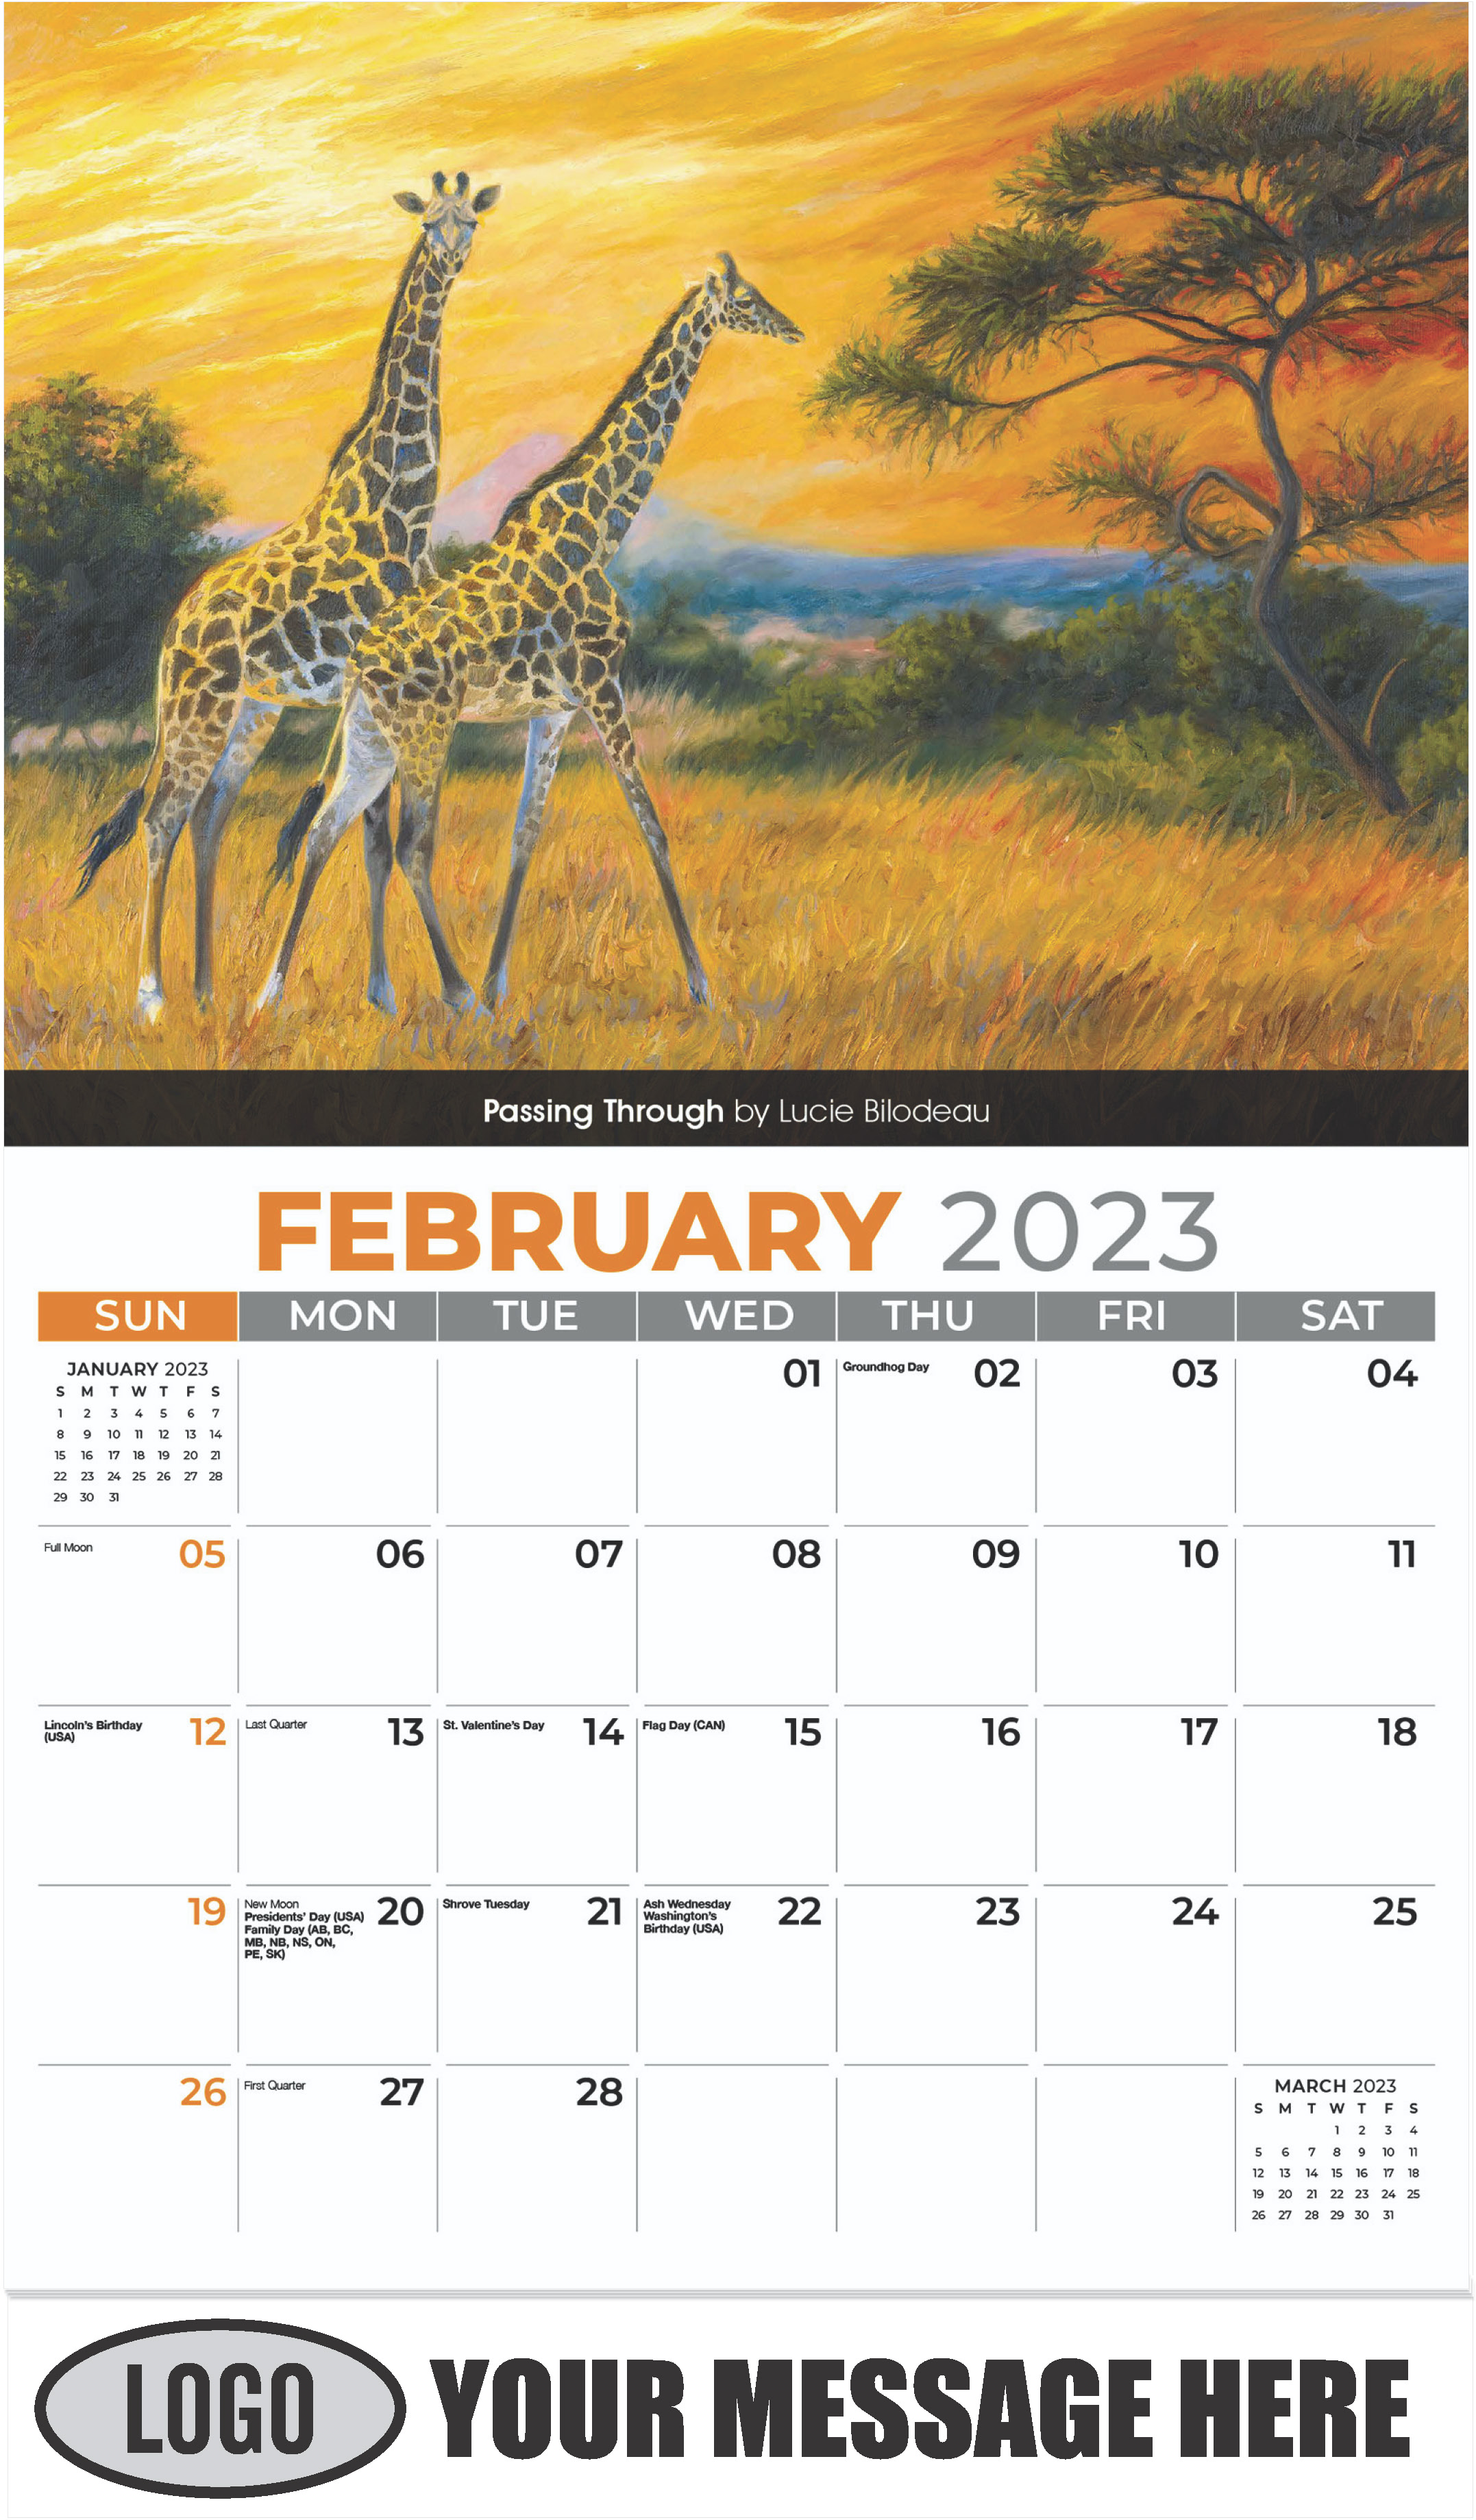 Passing Through by Lucie Bilodeau - February - Wildlife Portraits 2023 Promotional Calendar